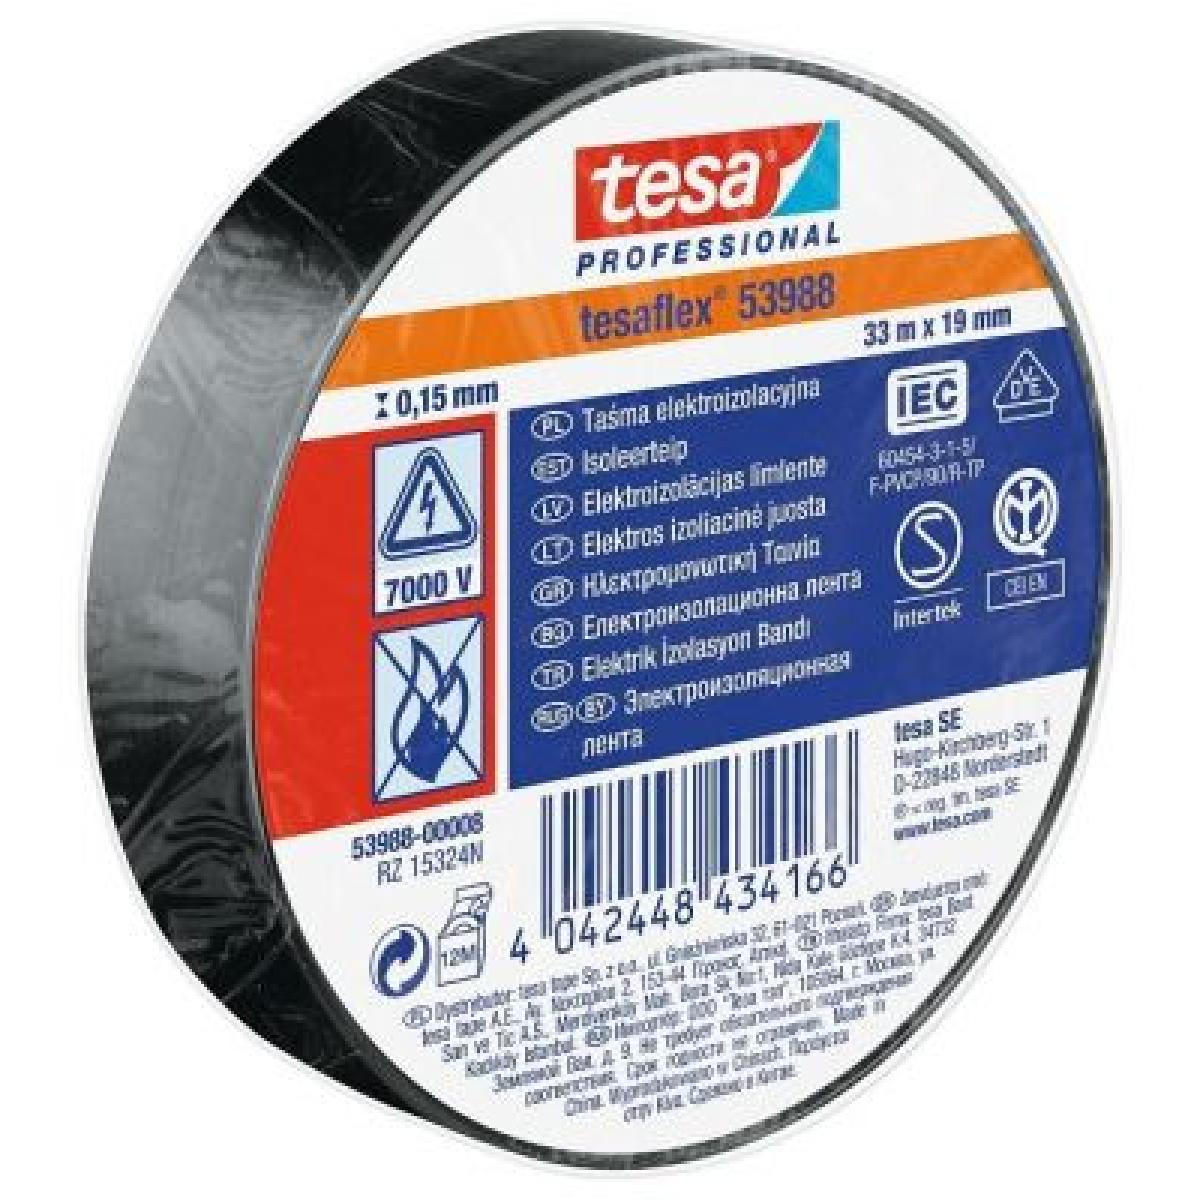 Tesa Professional Soft PVC Insulation Tape